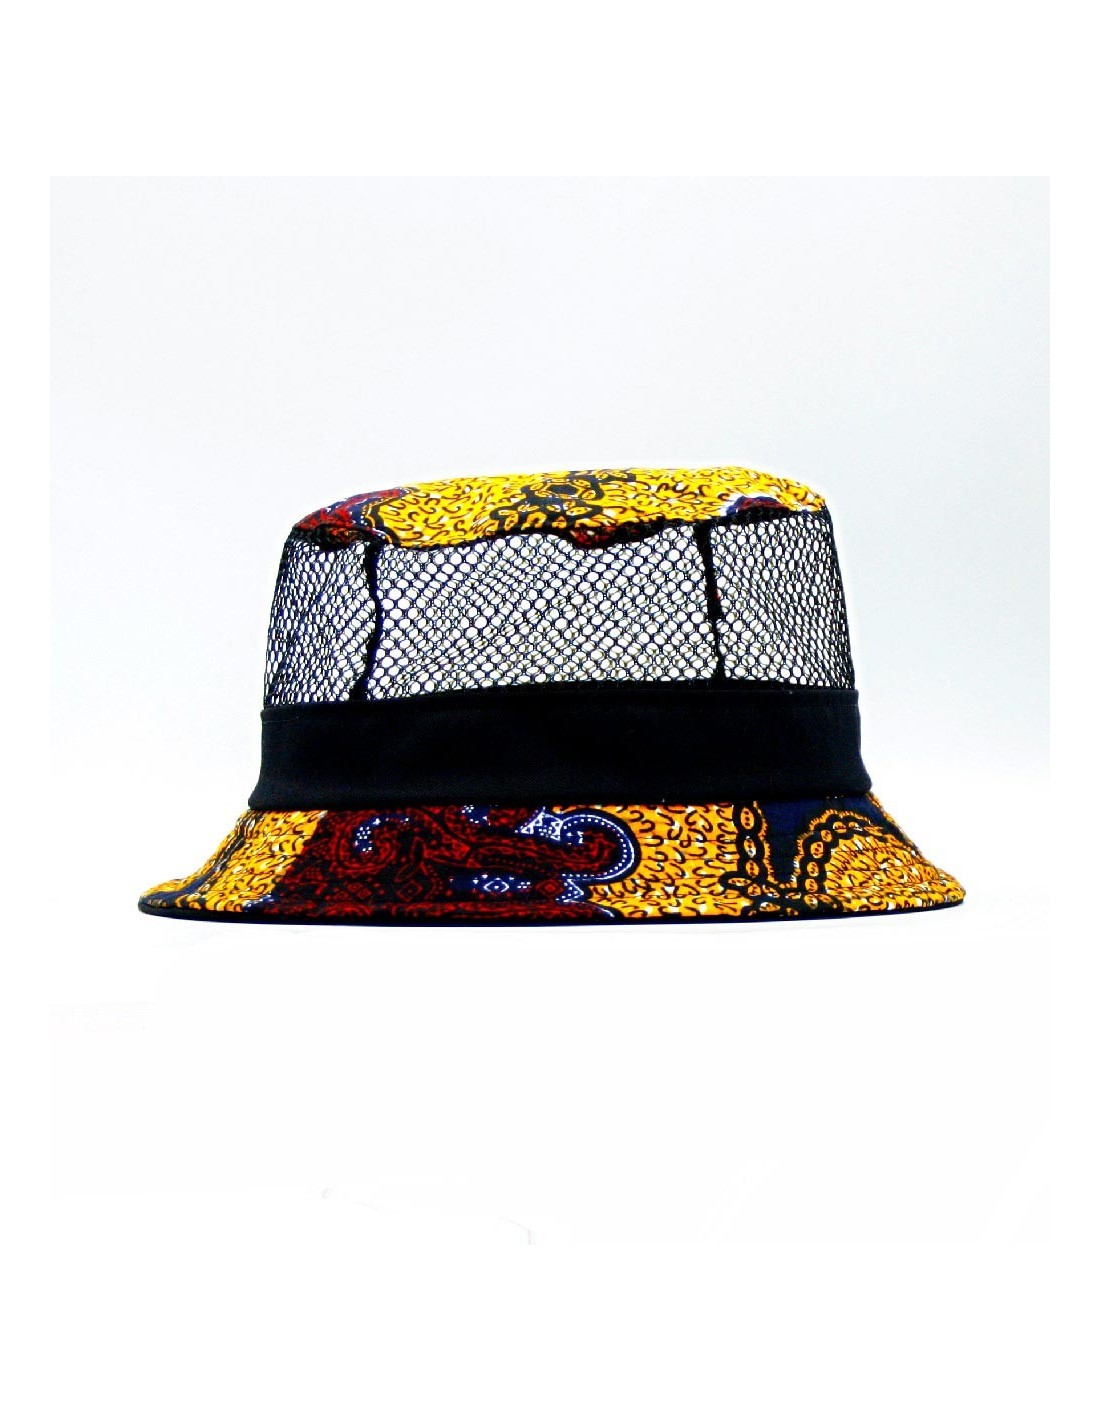 SKY KENTE MESH Wax fabric and mesh fabric Bucket hat